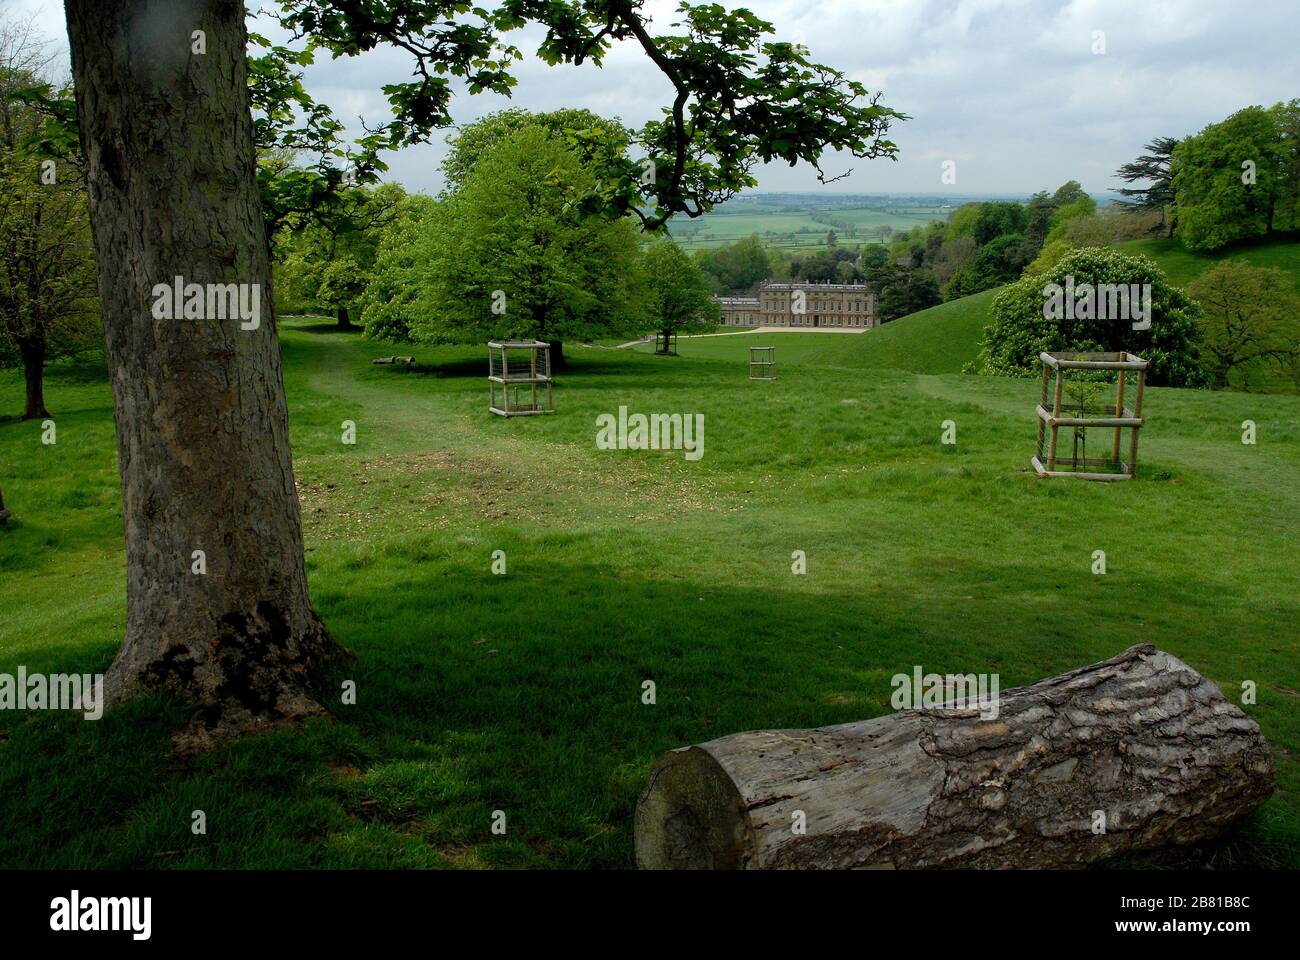 Dyrham Park. Villa aus dem späten 17. Jahrhundert, Garten- und Hirschpark Dyrham, NR Bath, Gloucestershire. Dyrham. National Trust, organización no gubernamental d Stockfoto